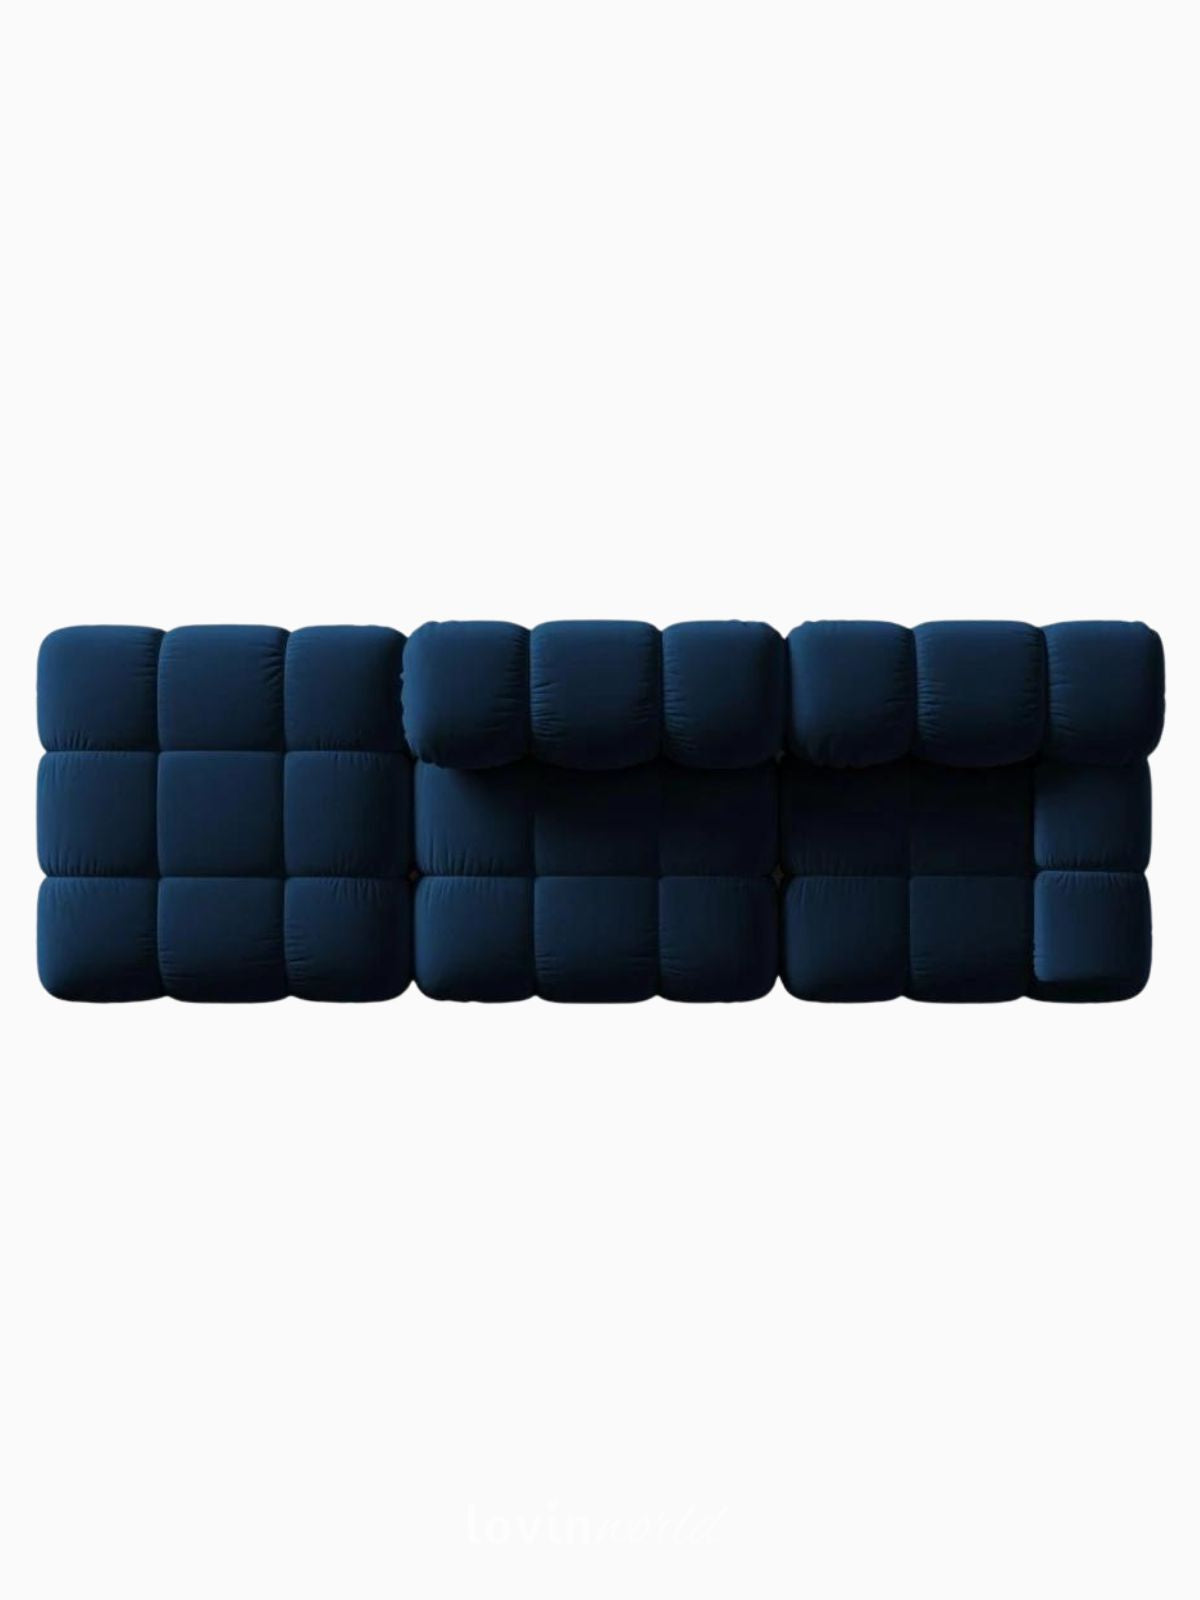 Divano modulare 4 sedute Bellis in velluto, colore blu-4